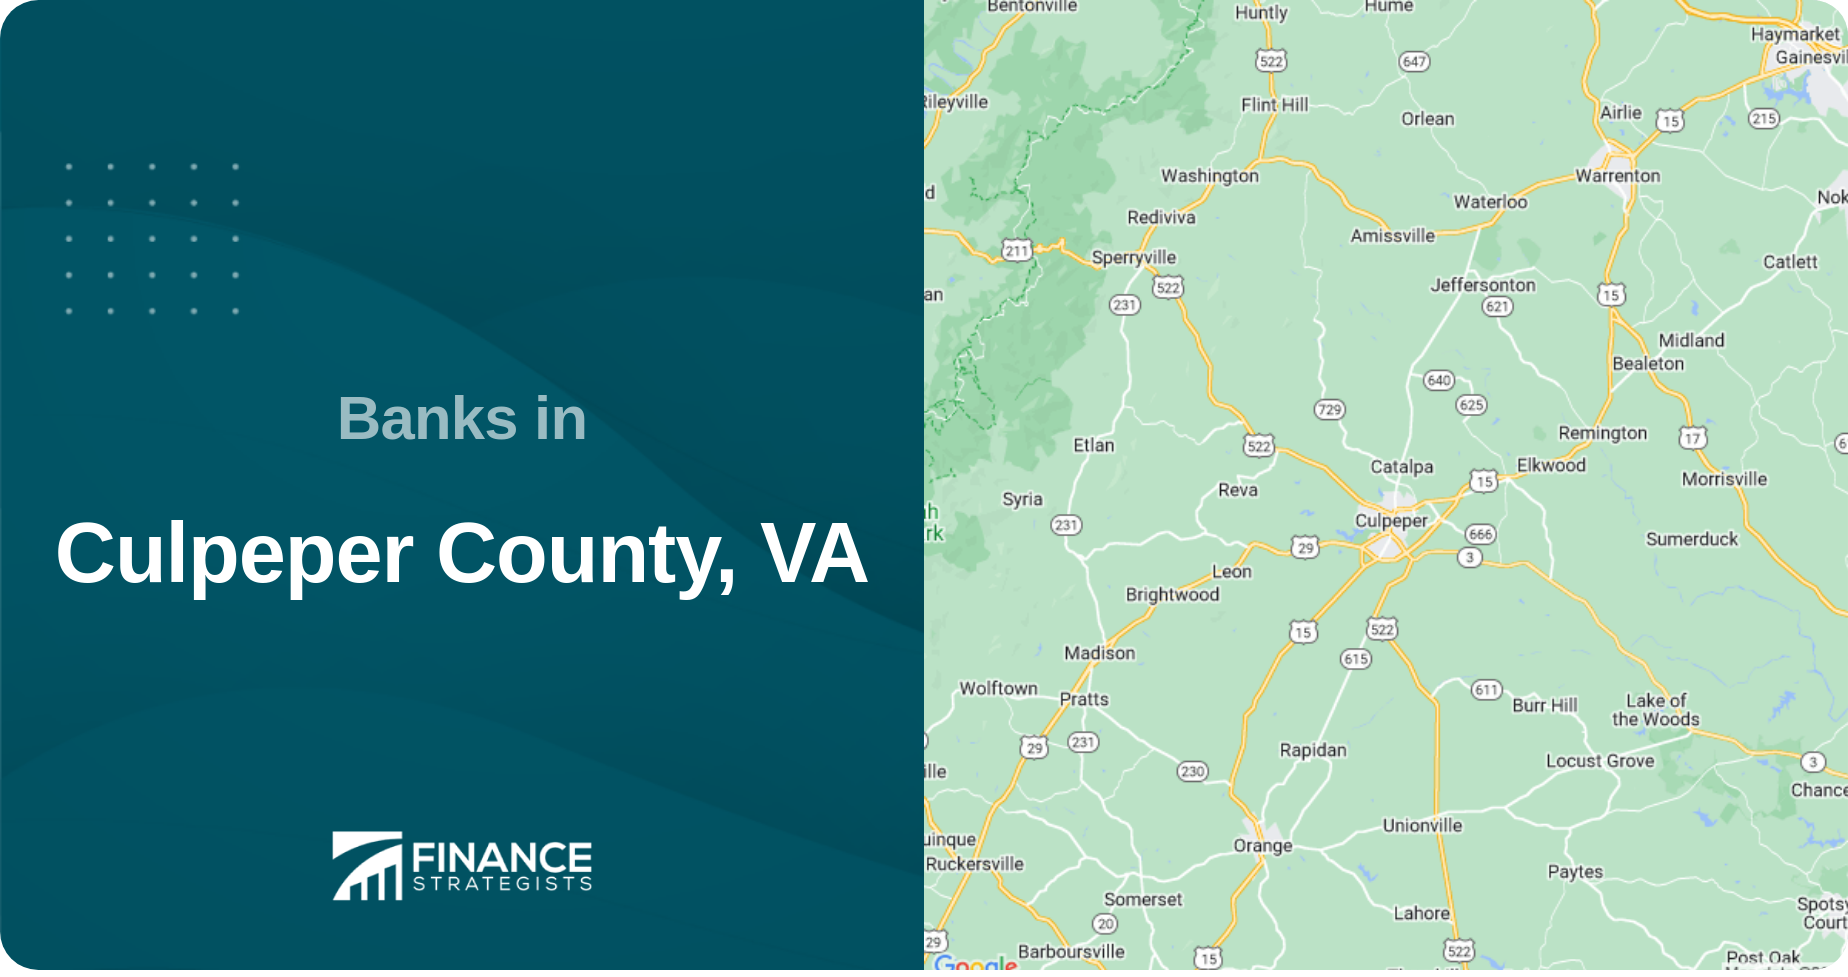 Banks in Culpeper County, VA